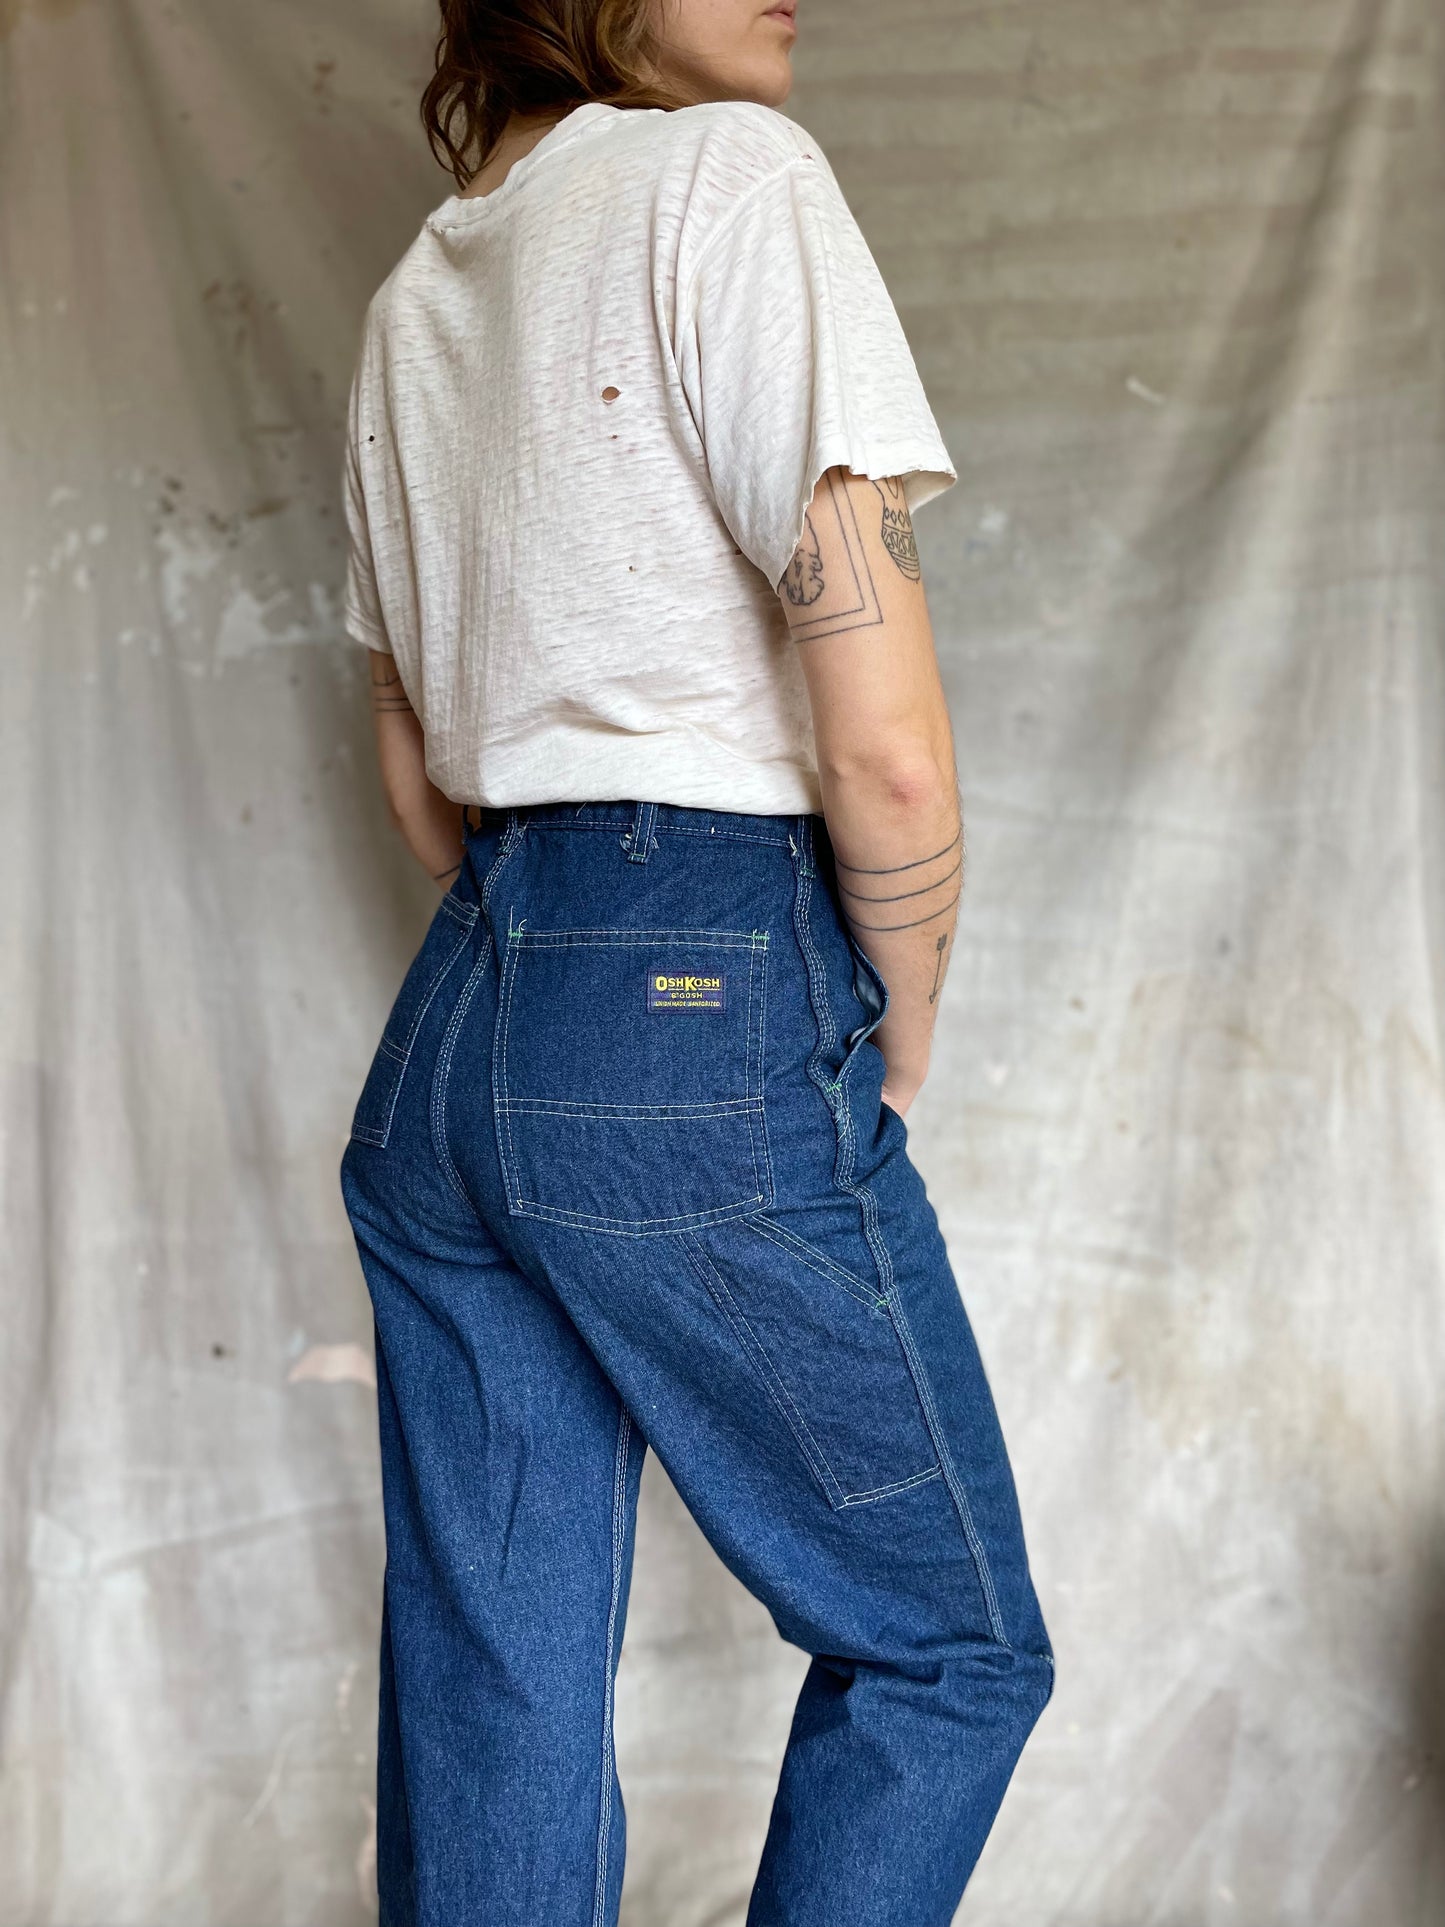 80s OshKosh Jeans